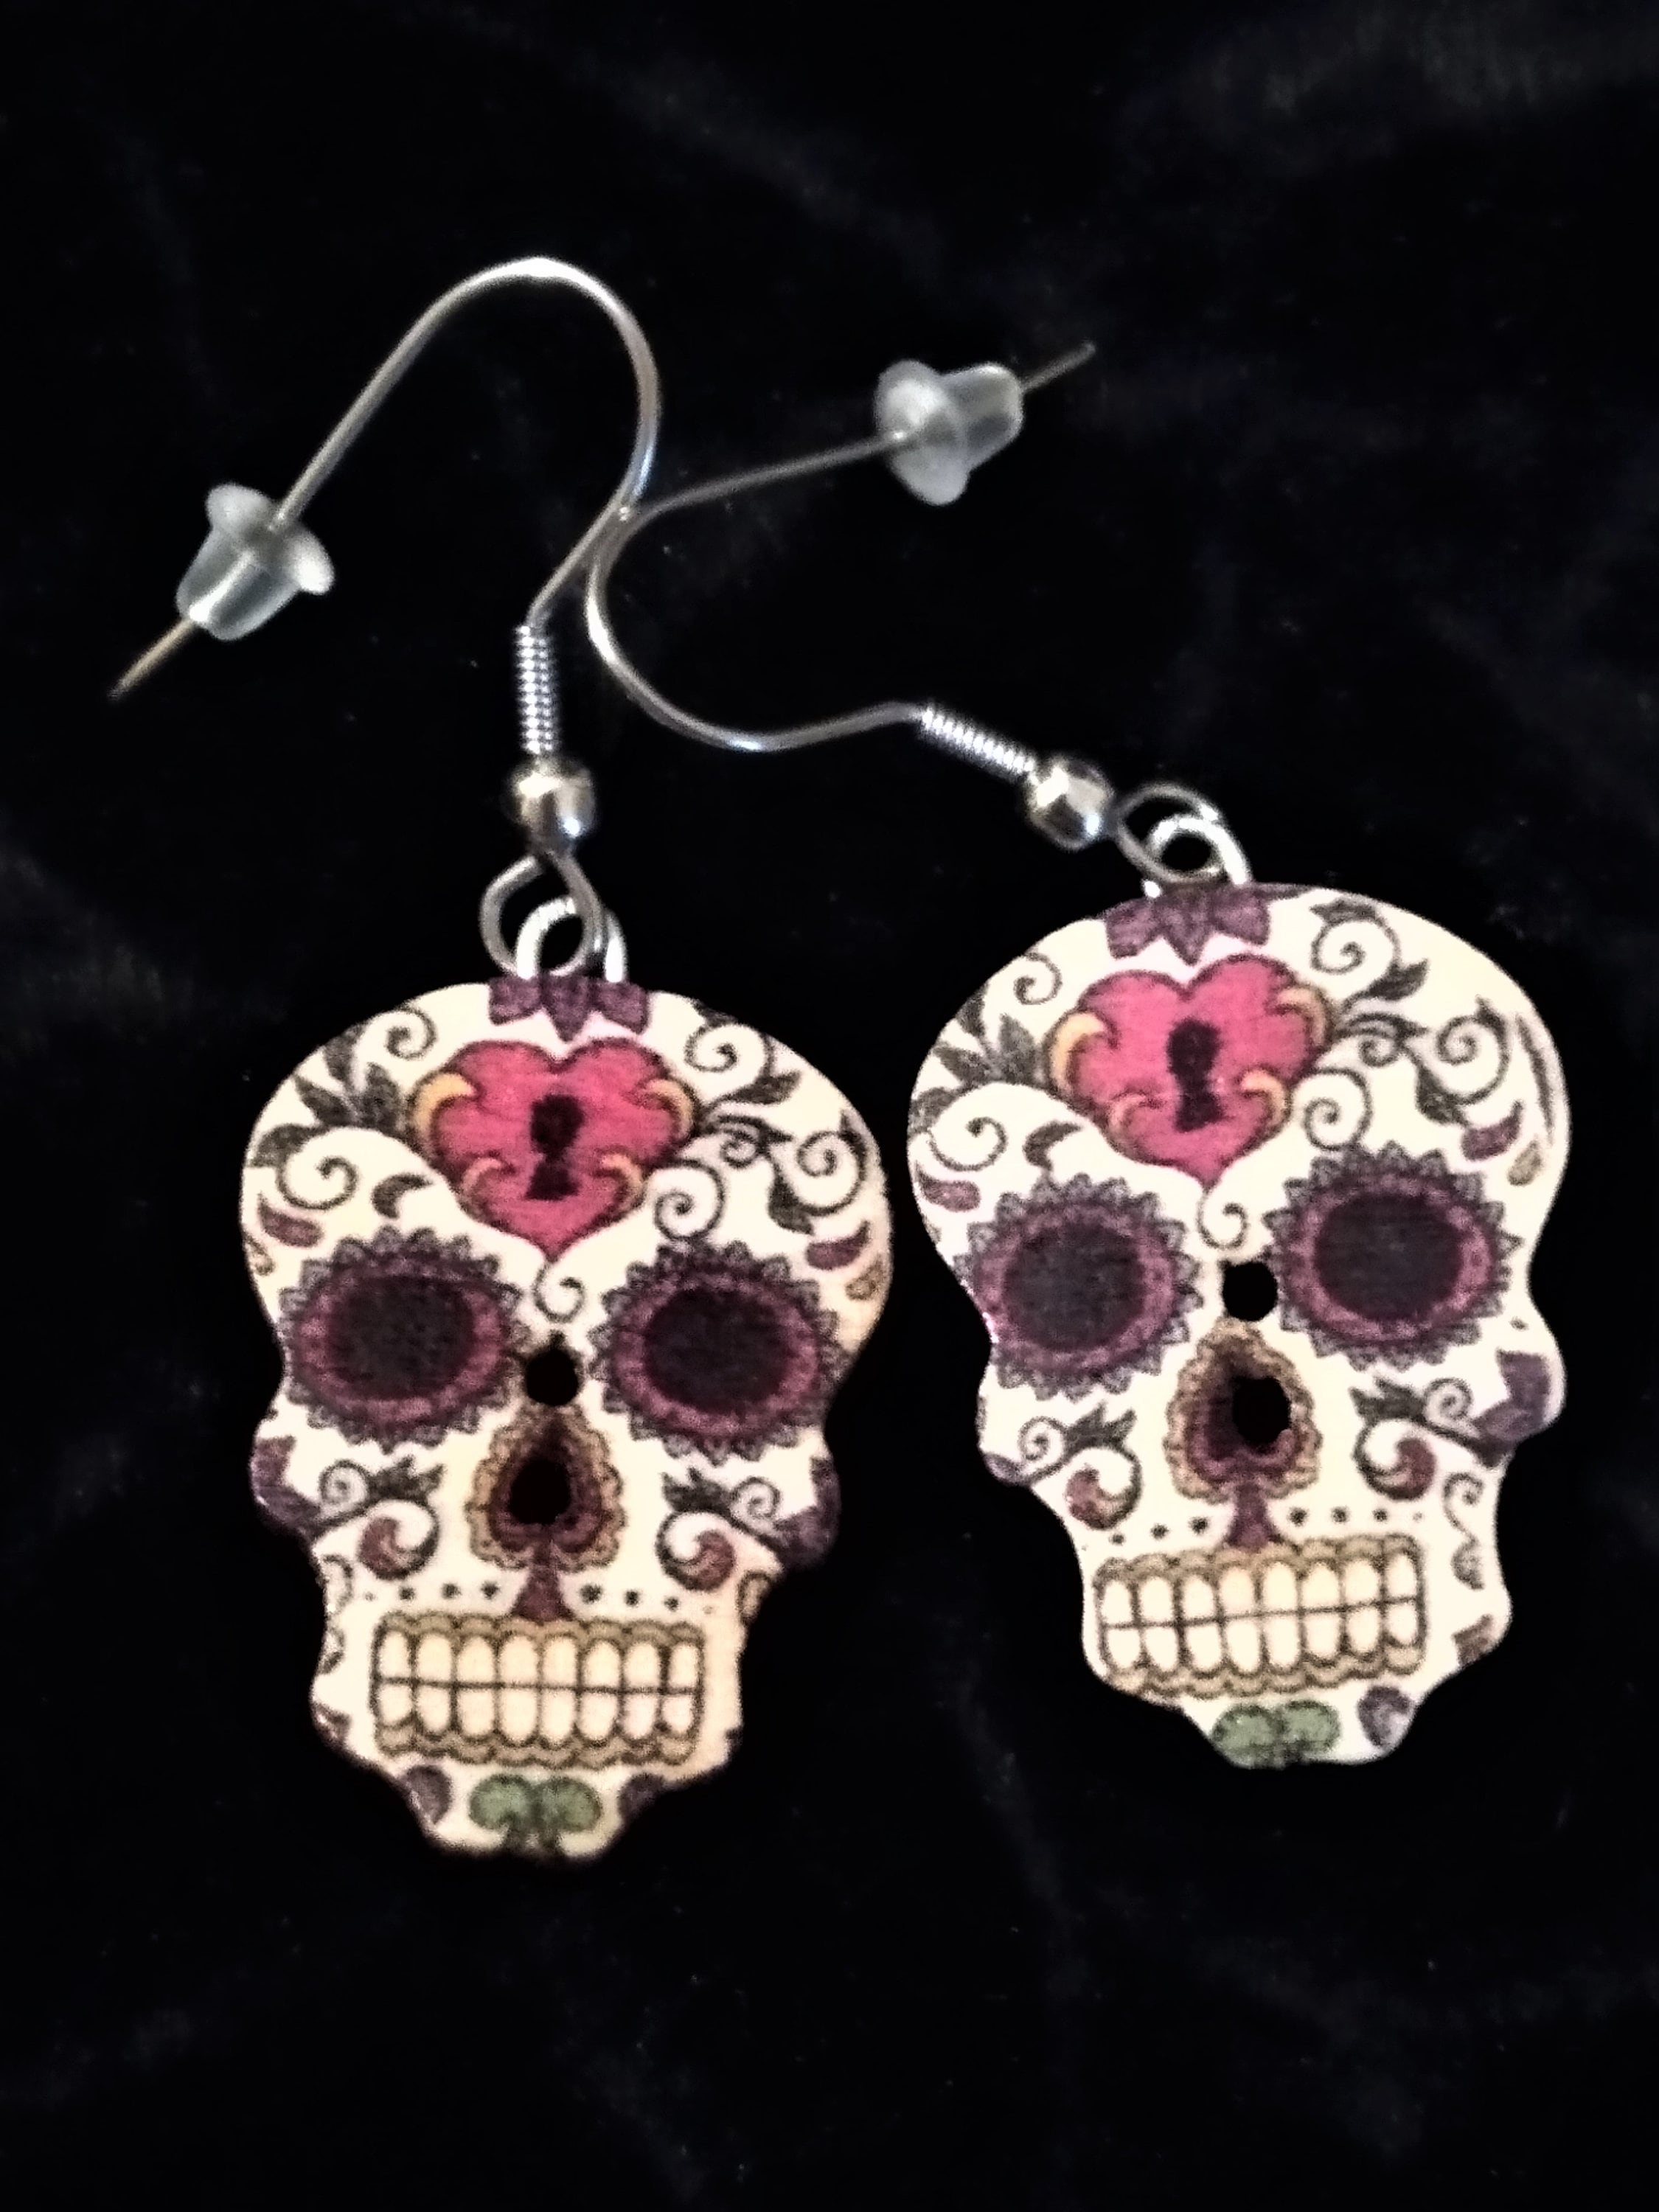 La muerte earrings skull earrings handmade studs resin earrings 1 inch studs wood block earrings